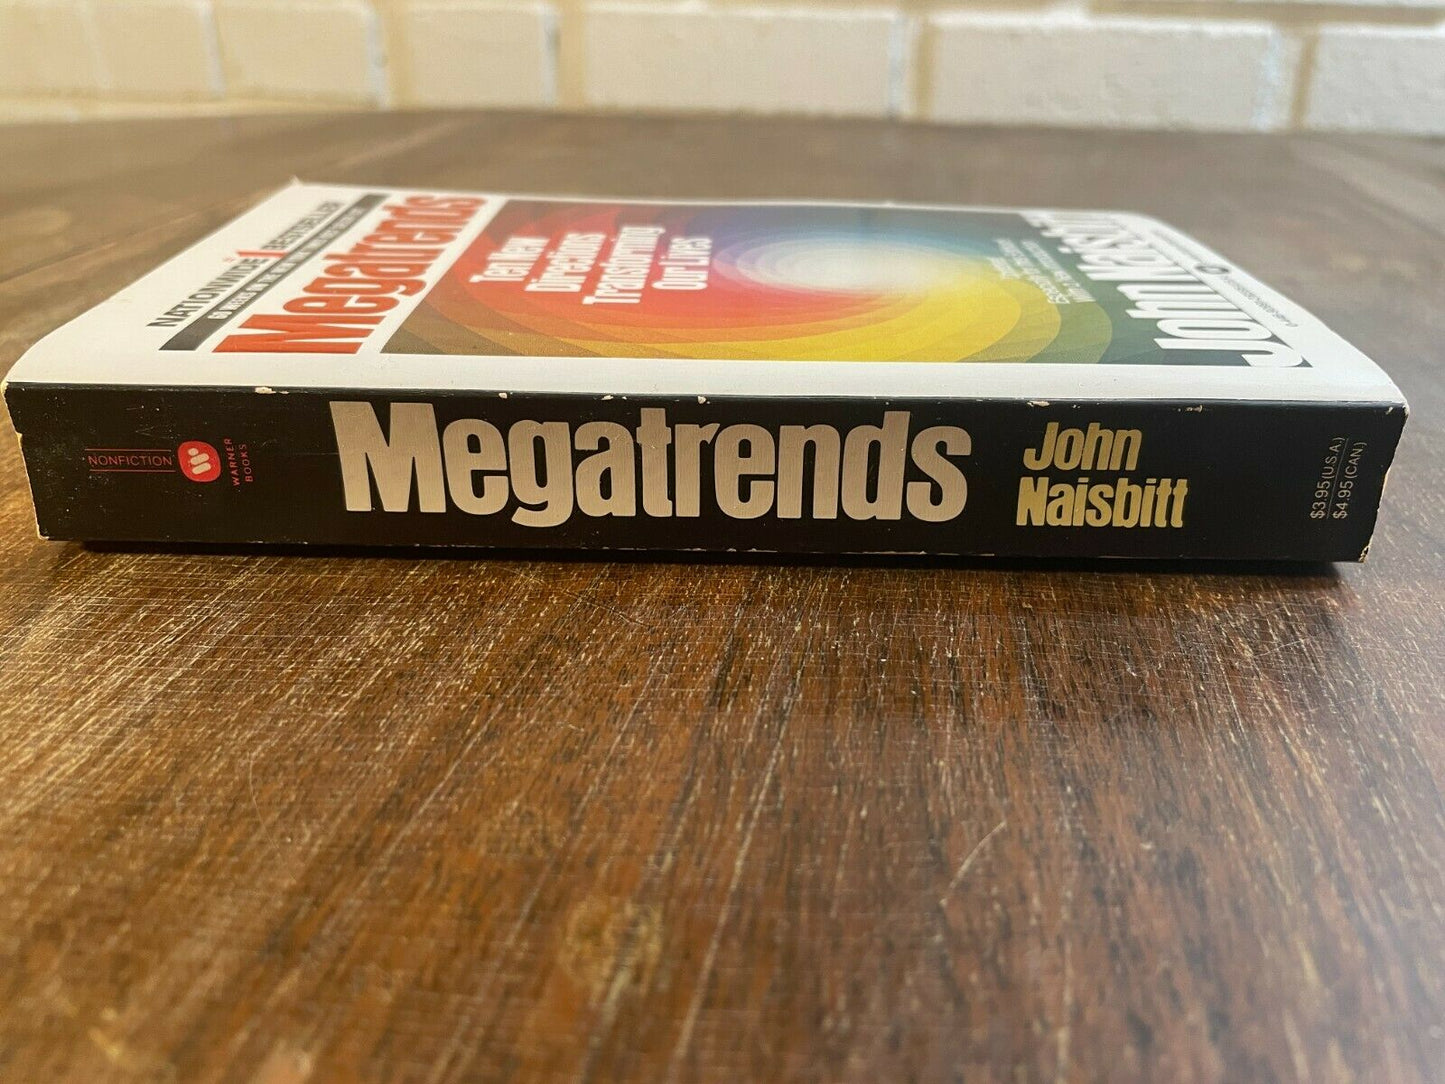 Megatrends, Ten New Directions Transforming Our Lives by John Naisbitt (1984)